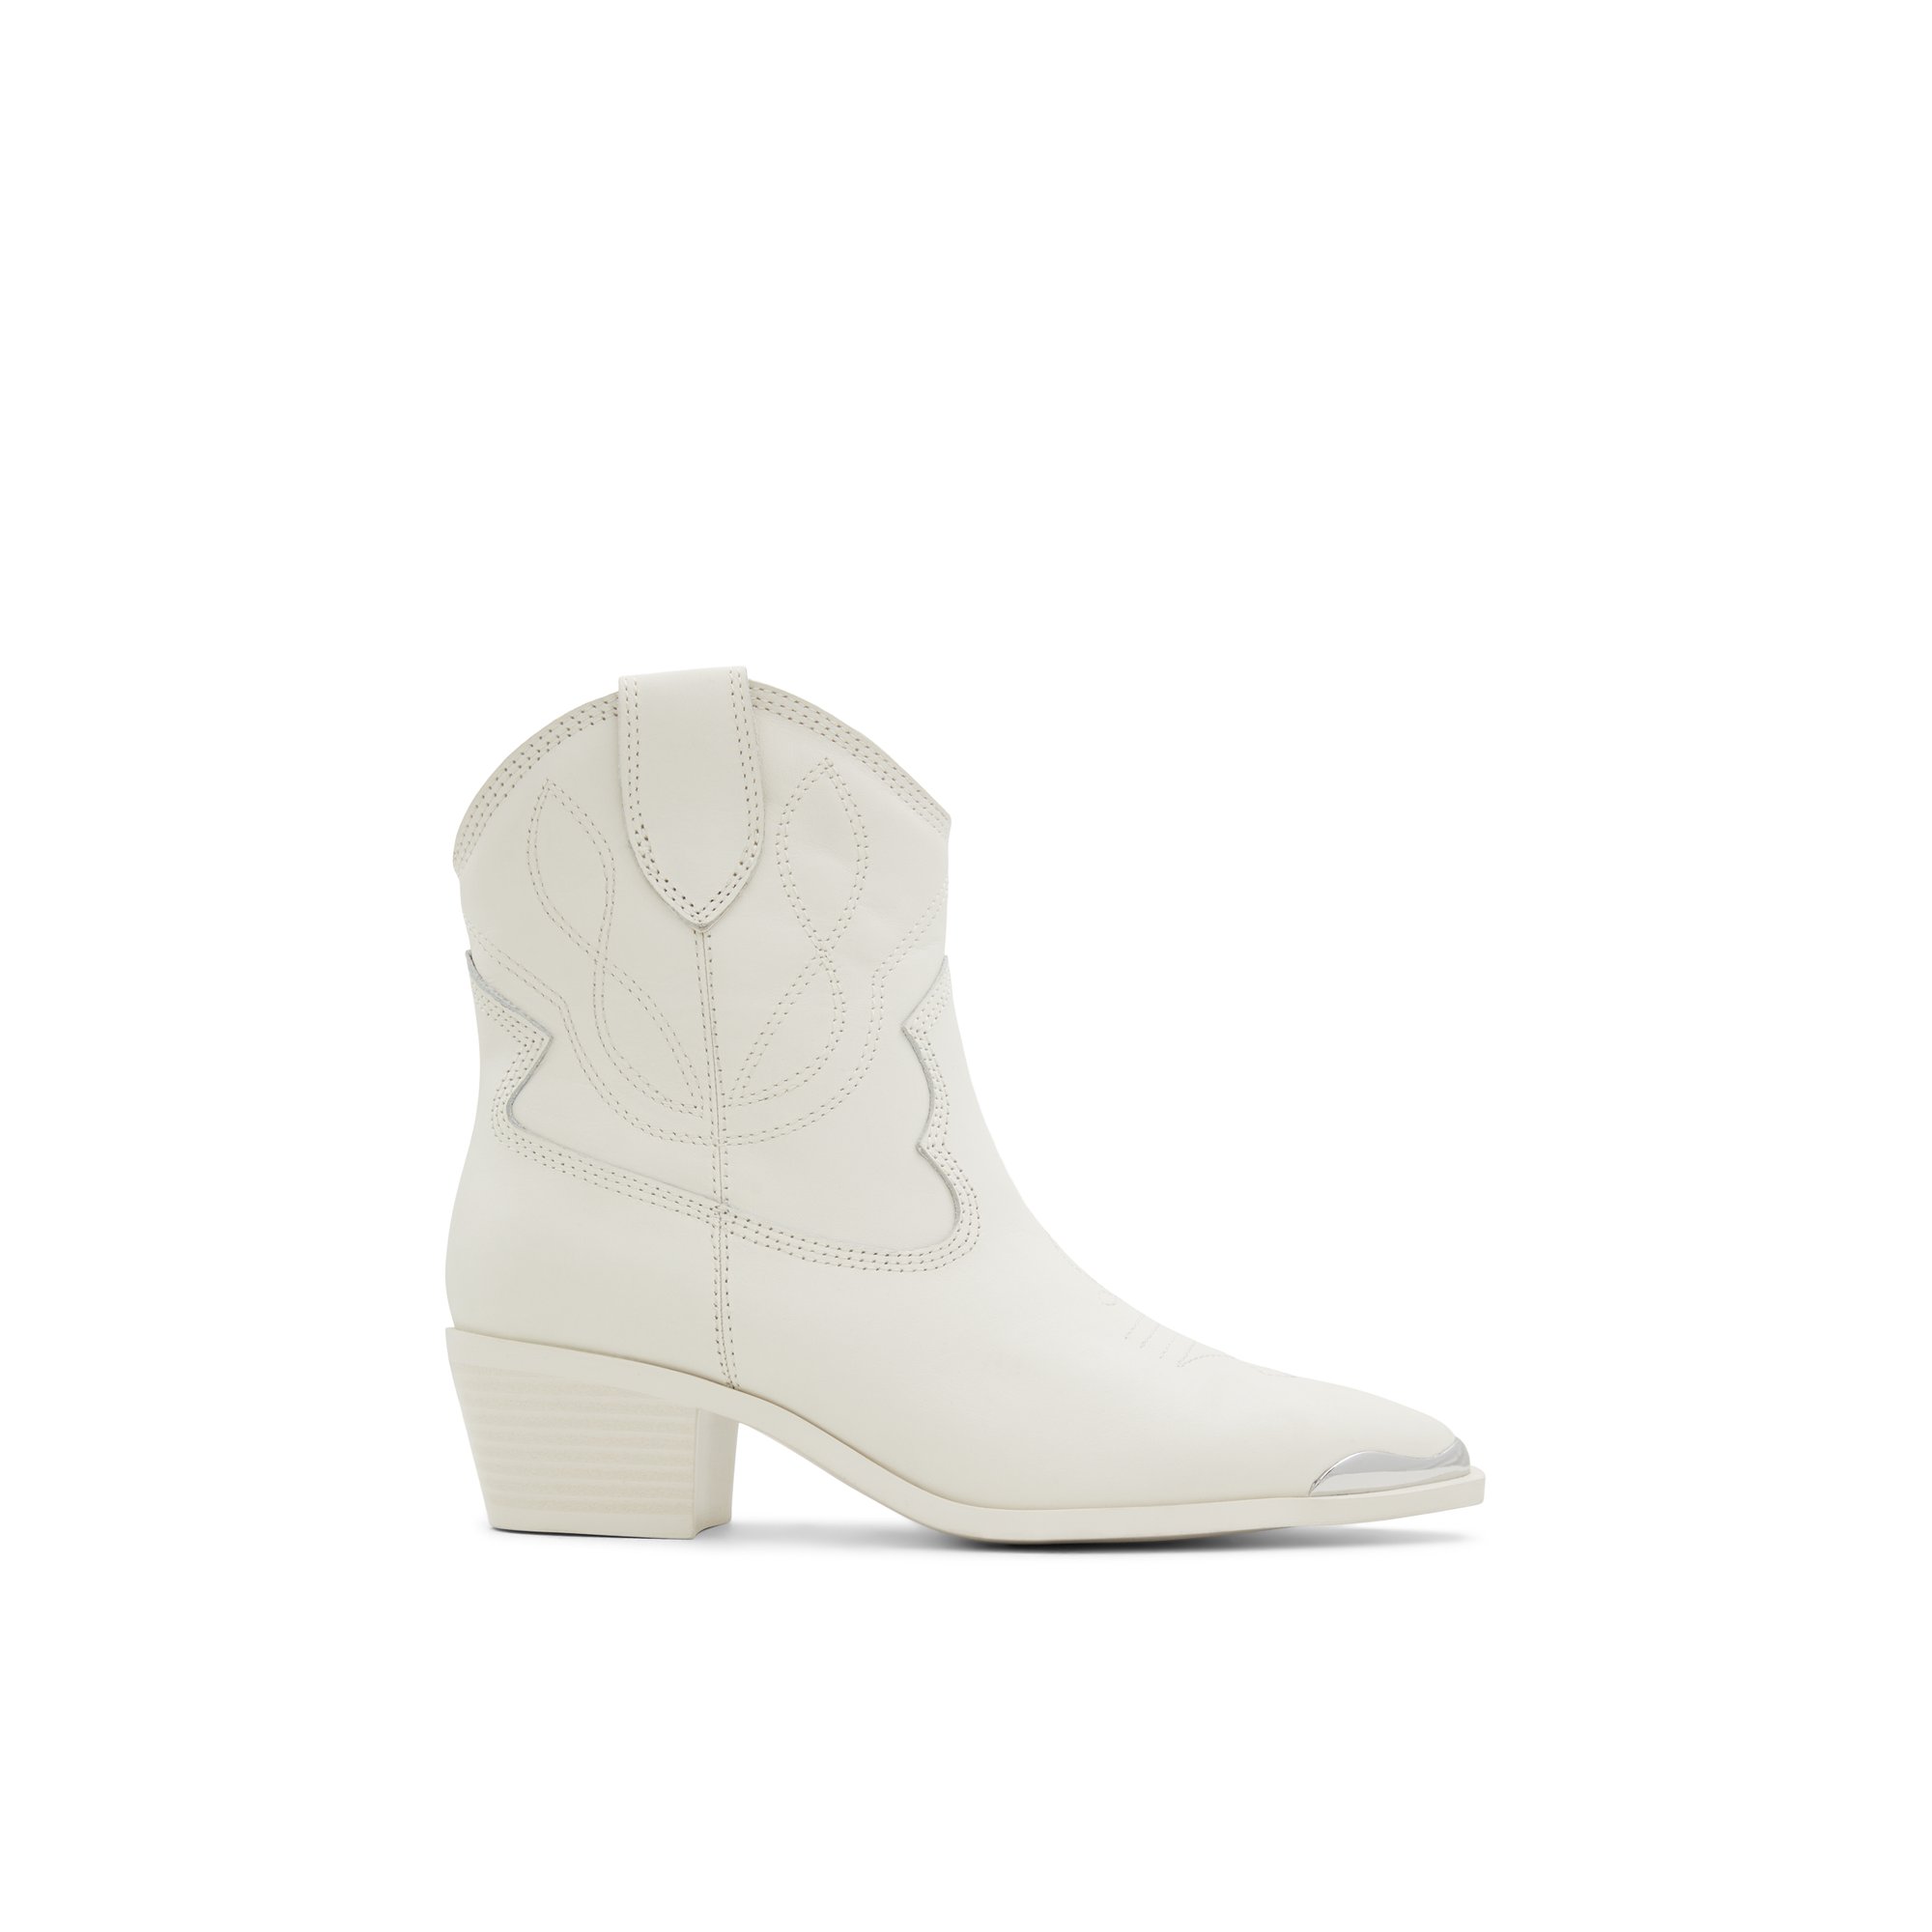 ALDO Valley - Women's Ankle Boot - White